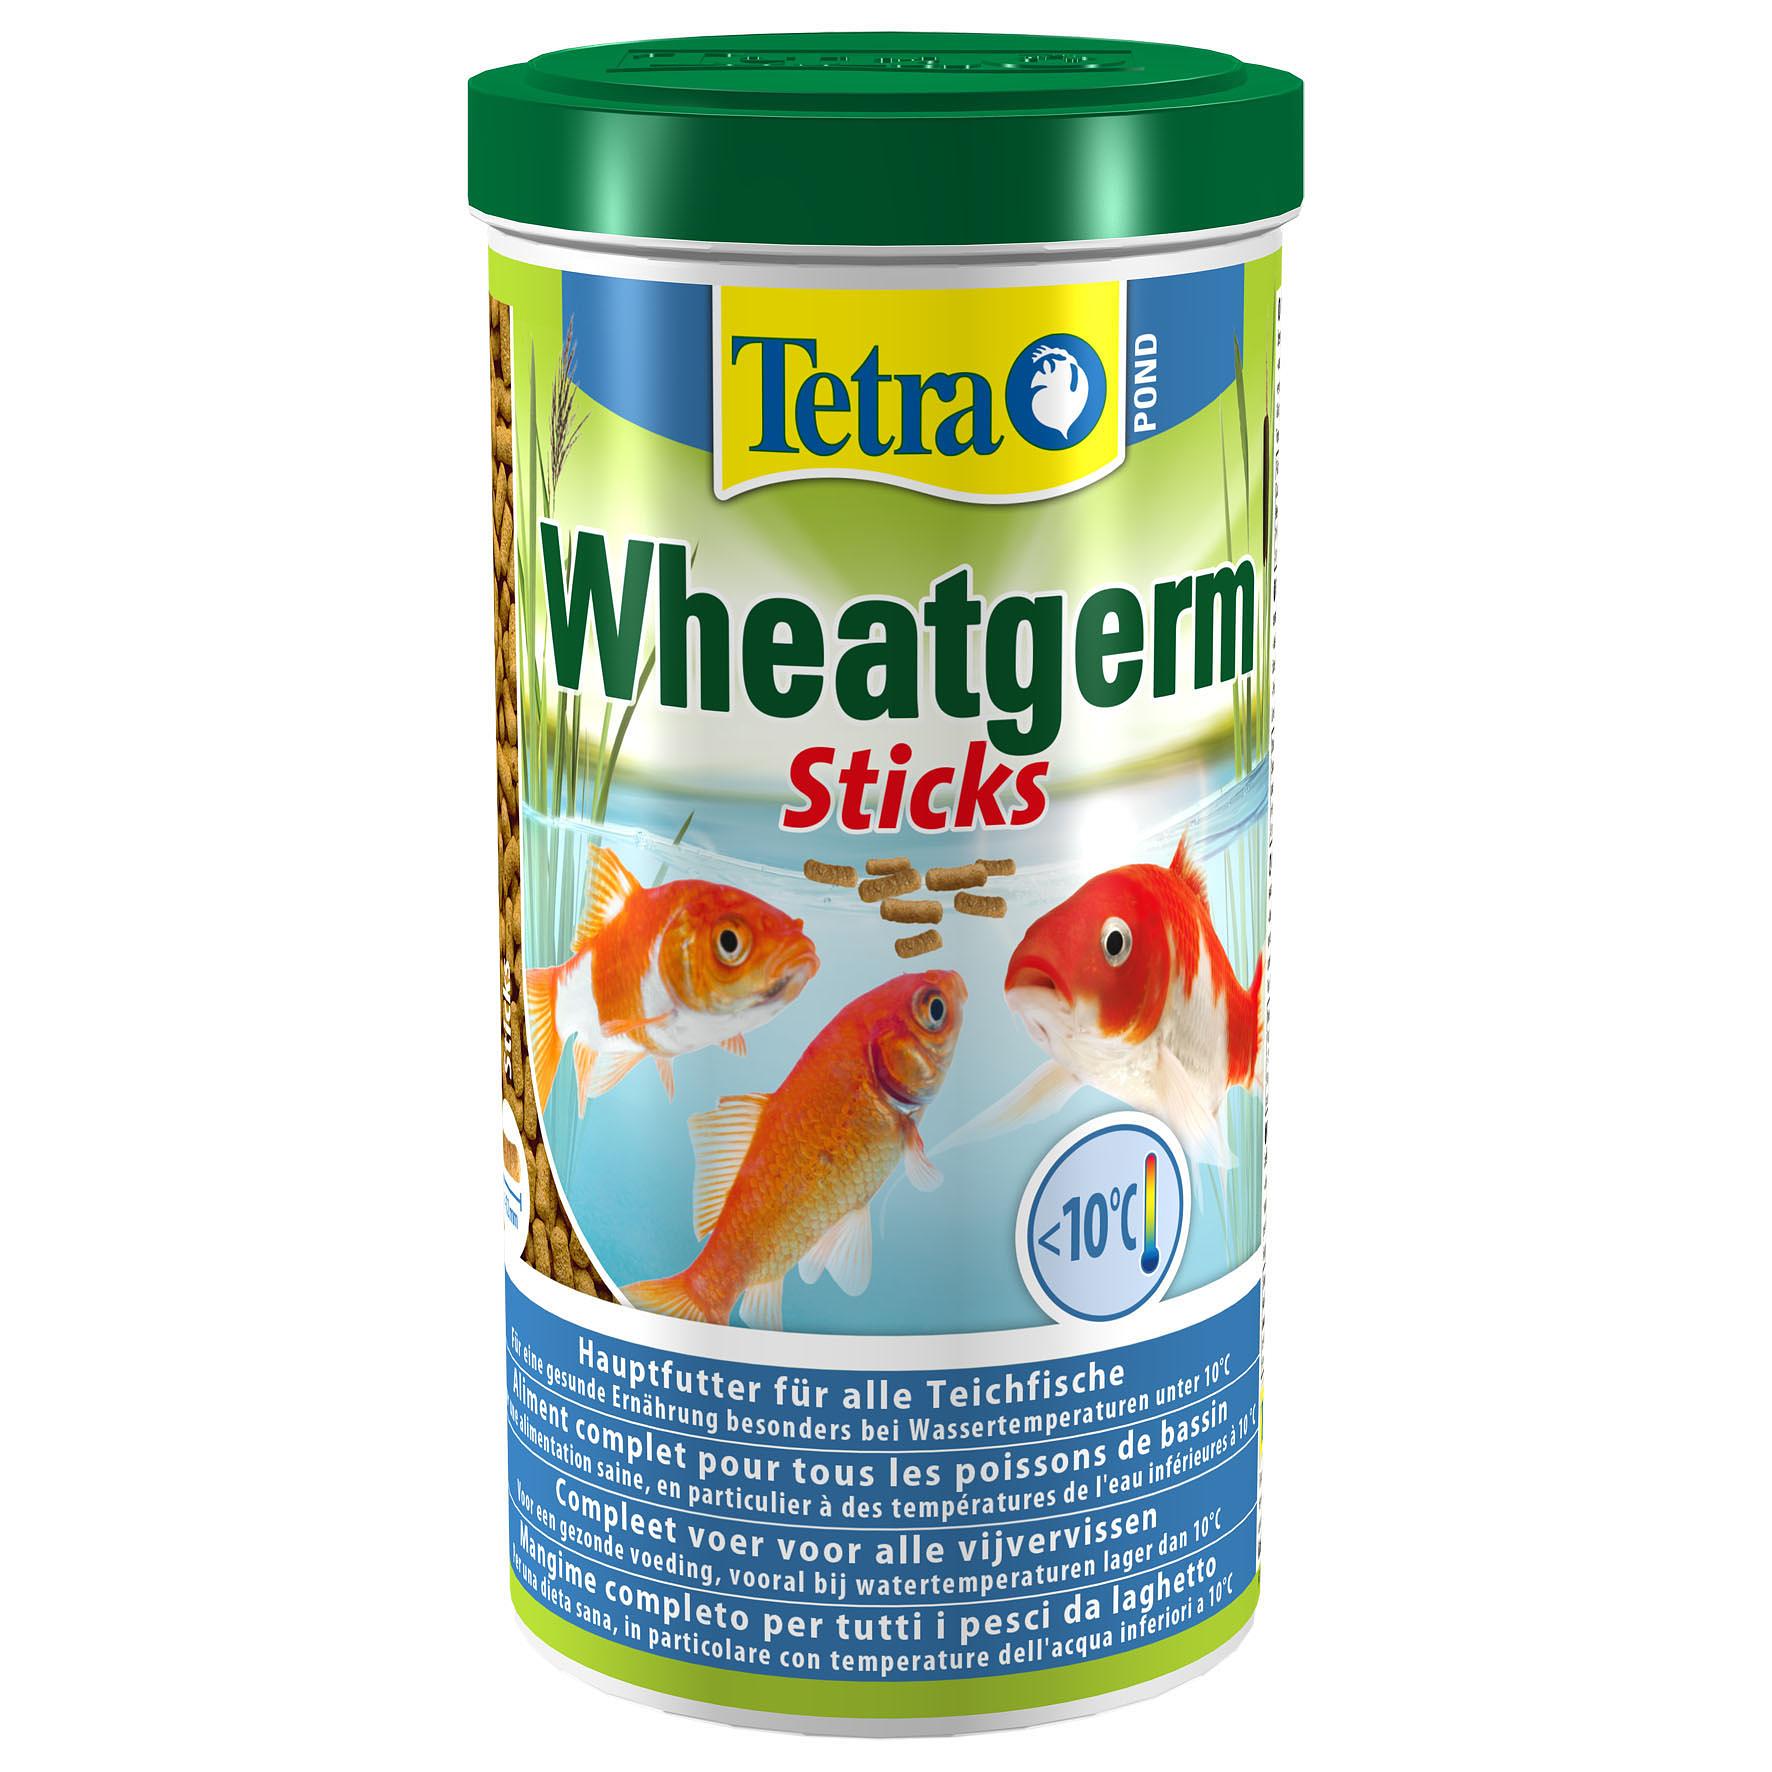 TetraPond Wheatgerm Sticks